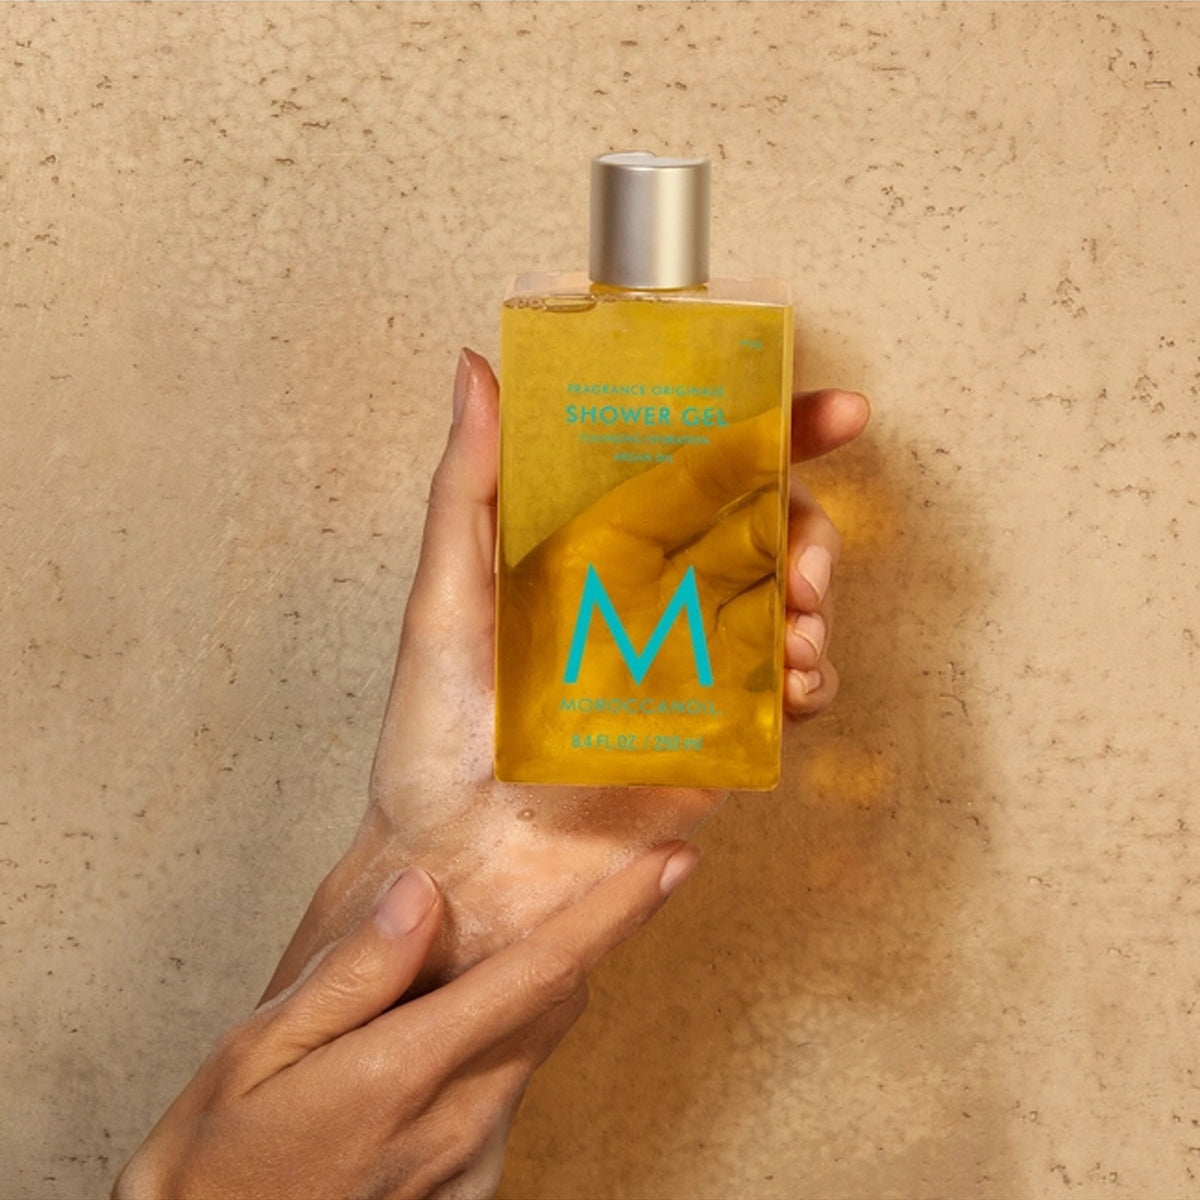 Moroccanoil Shower Gel 250ml - Shop Online | Retail Box